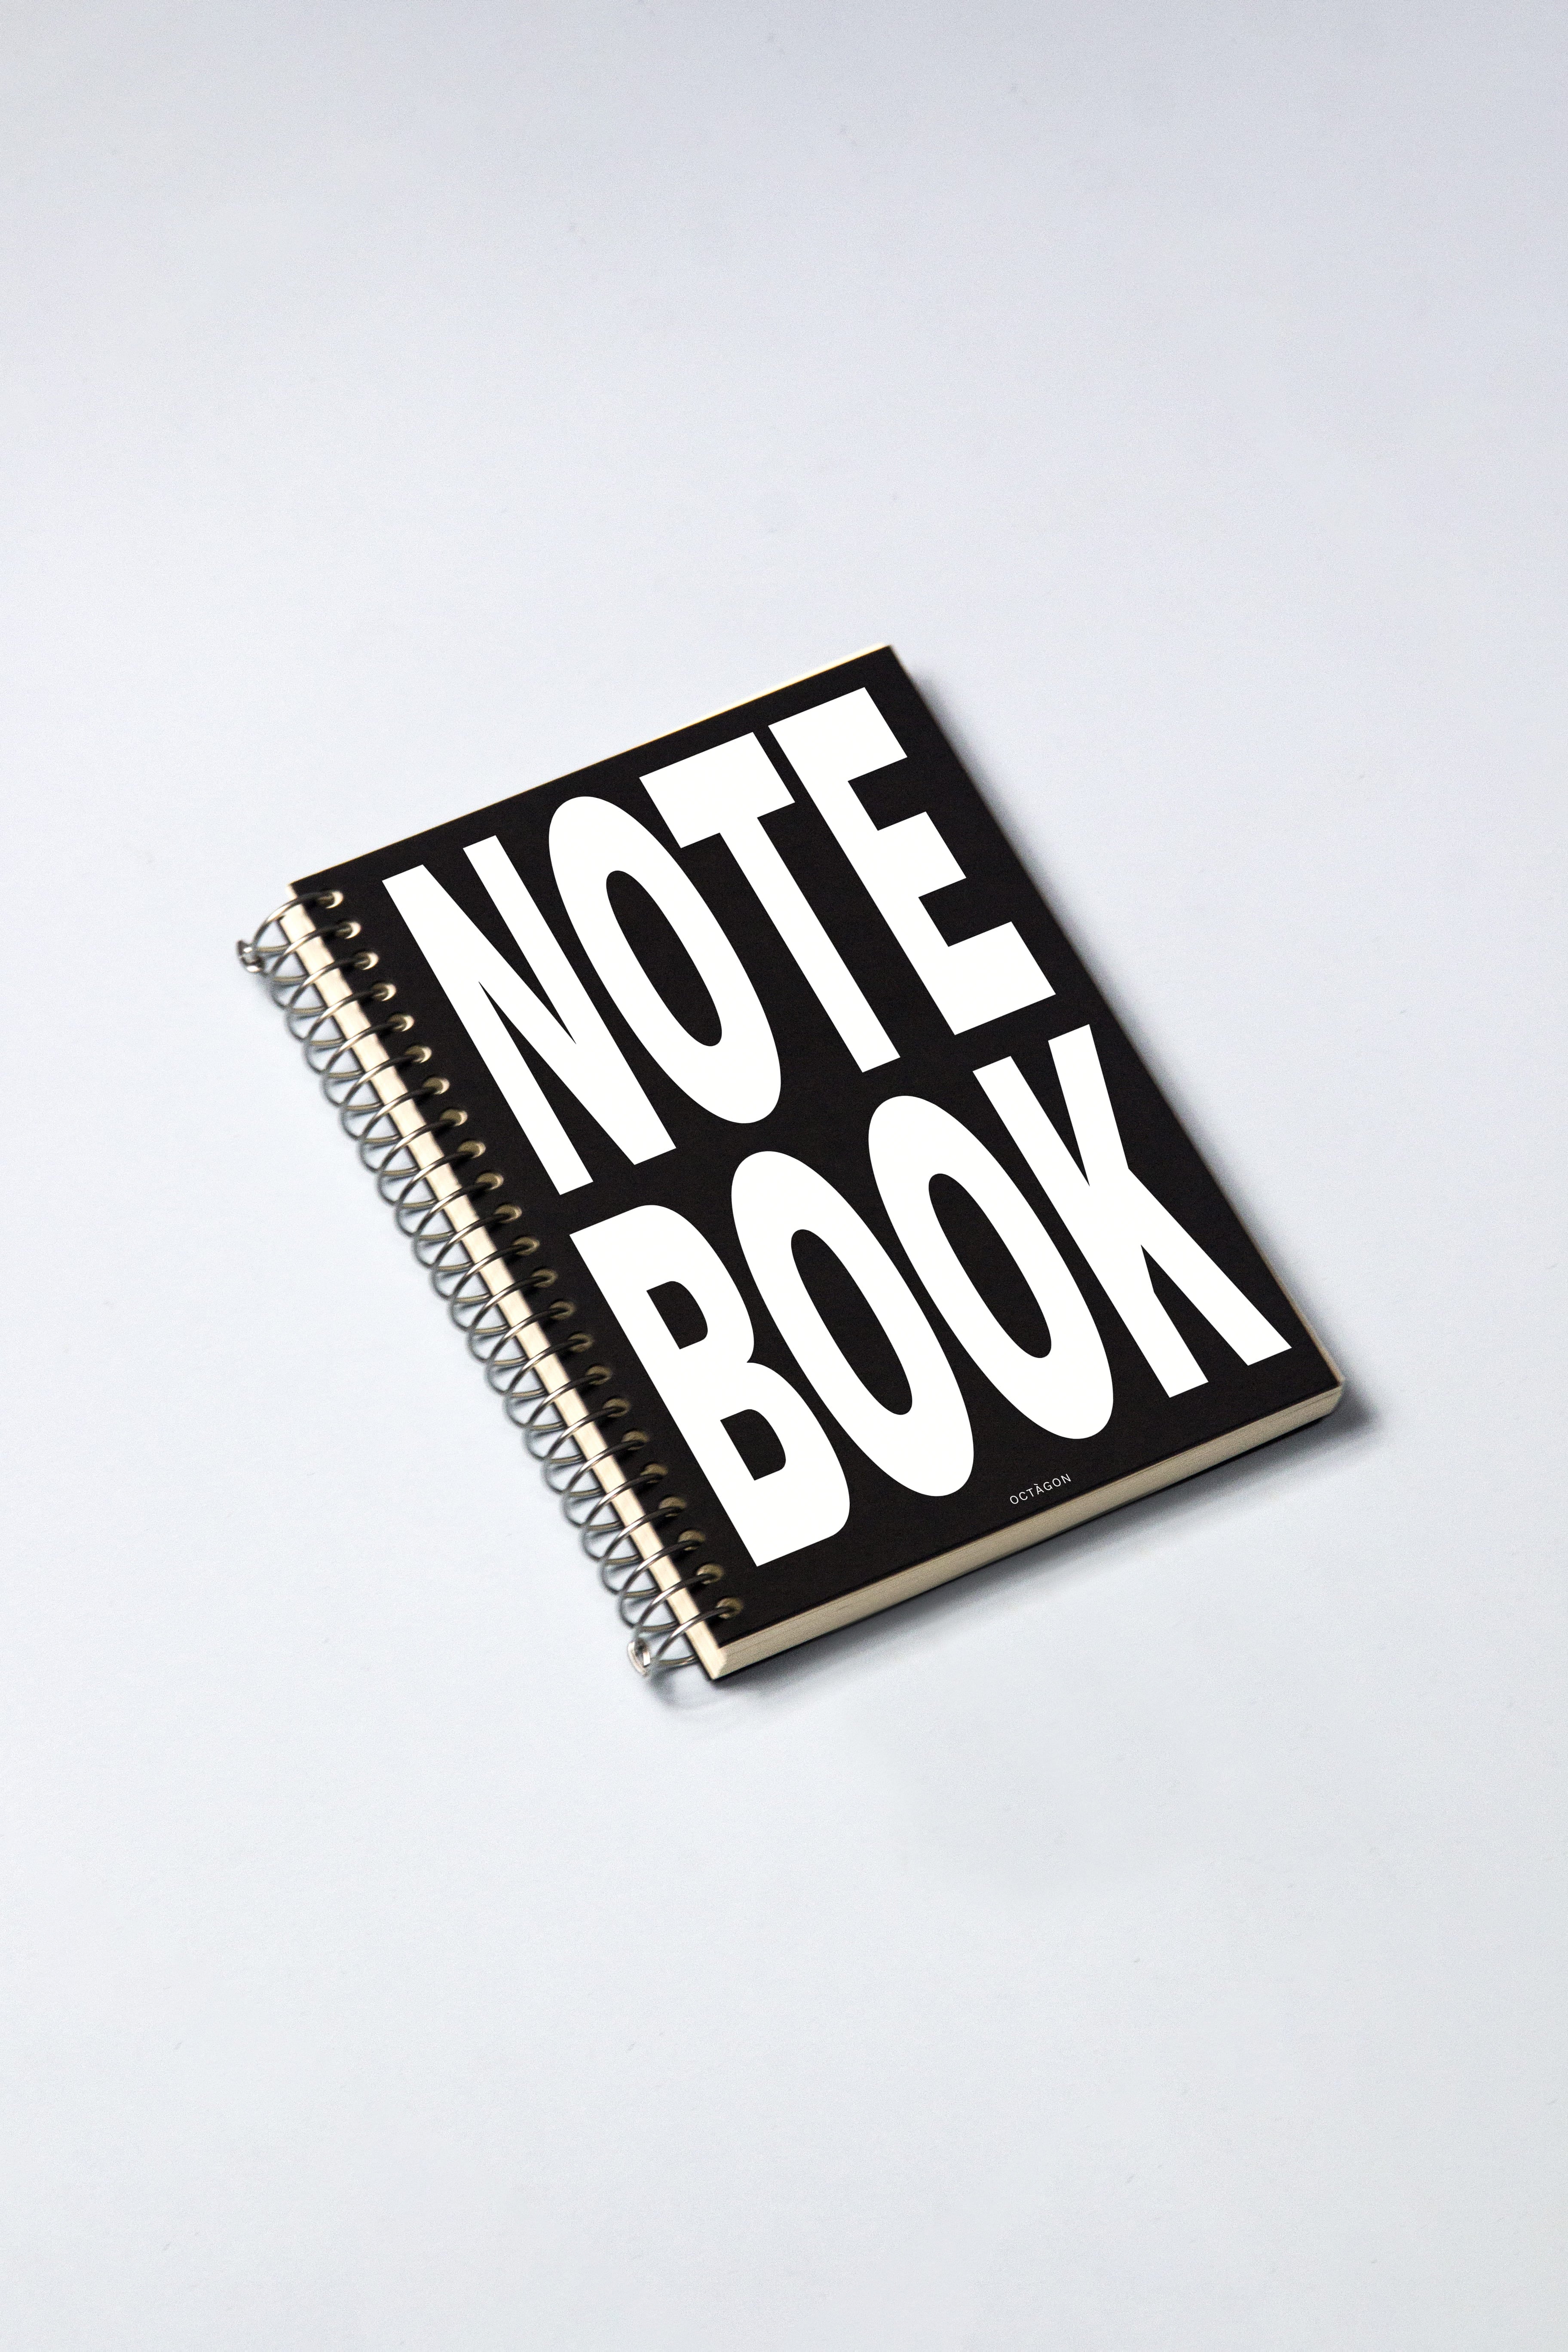 Best design spiral notebook ever